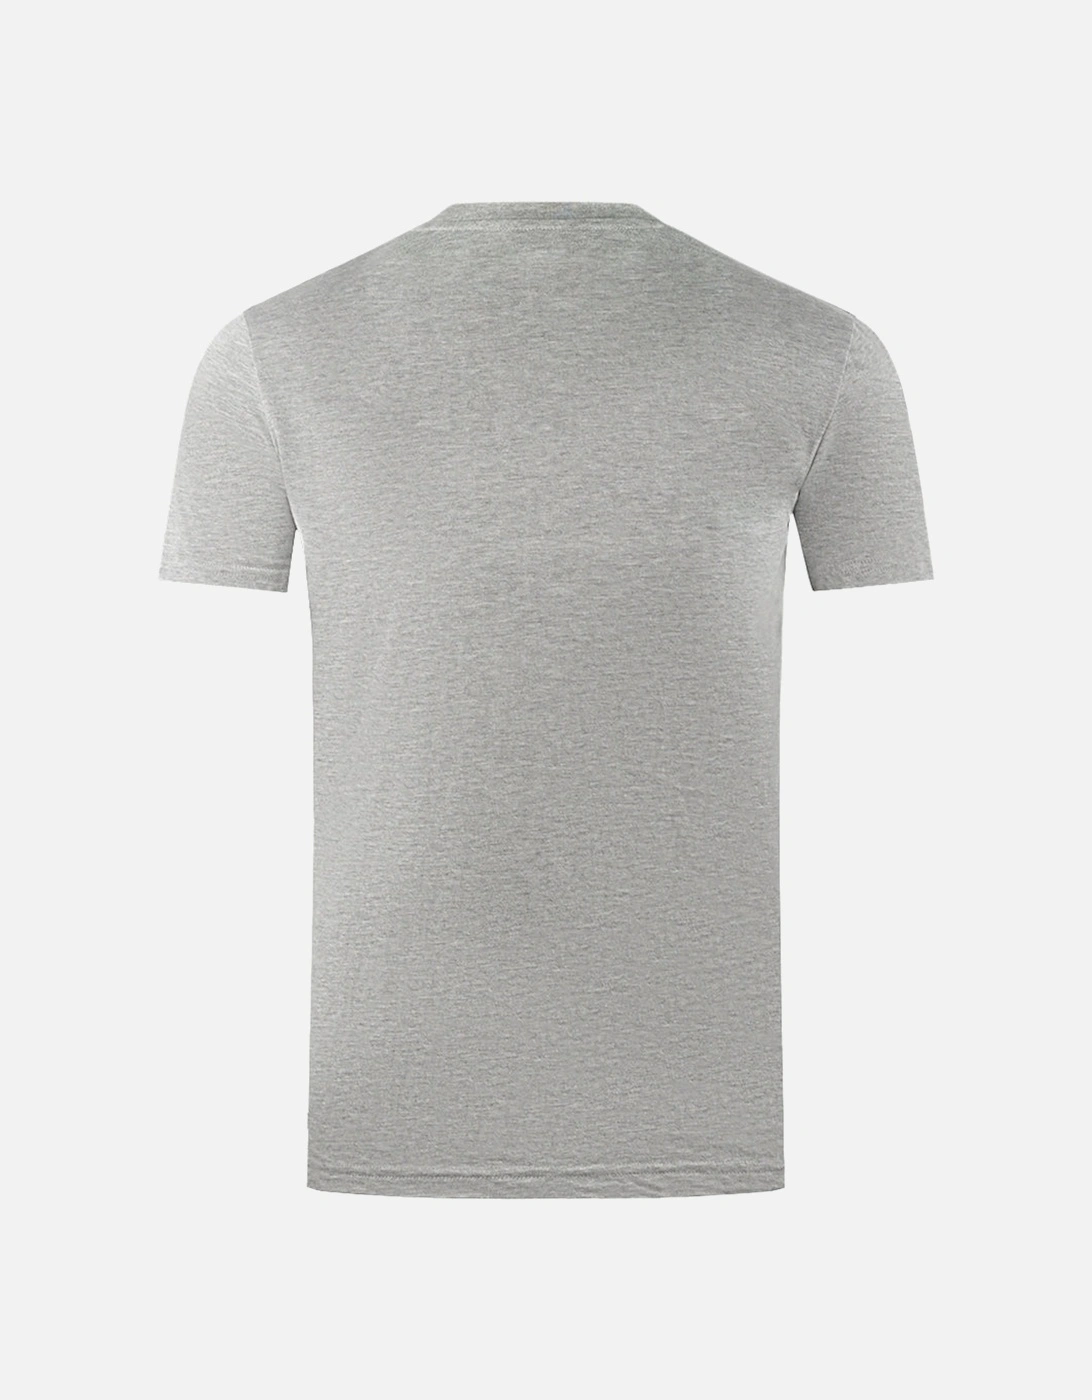 London Aldis Brand Logo On Chest Grey T-Shirt